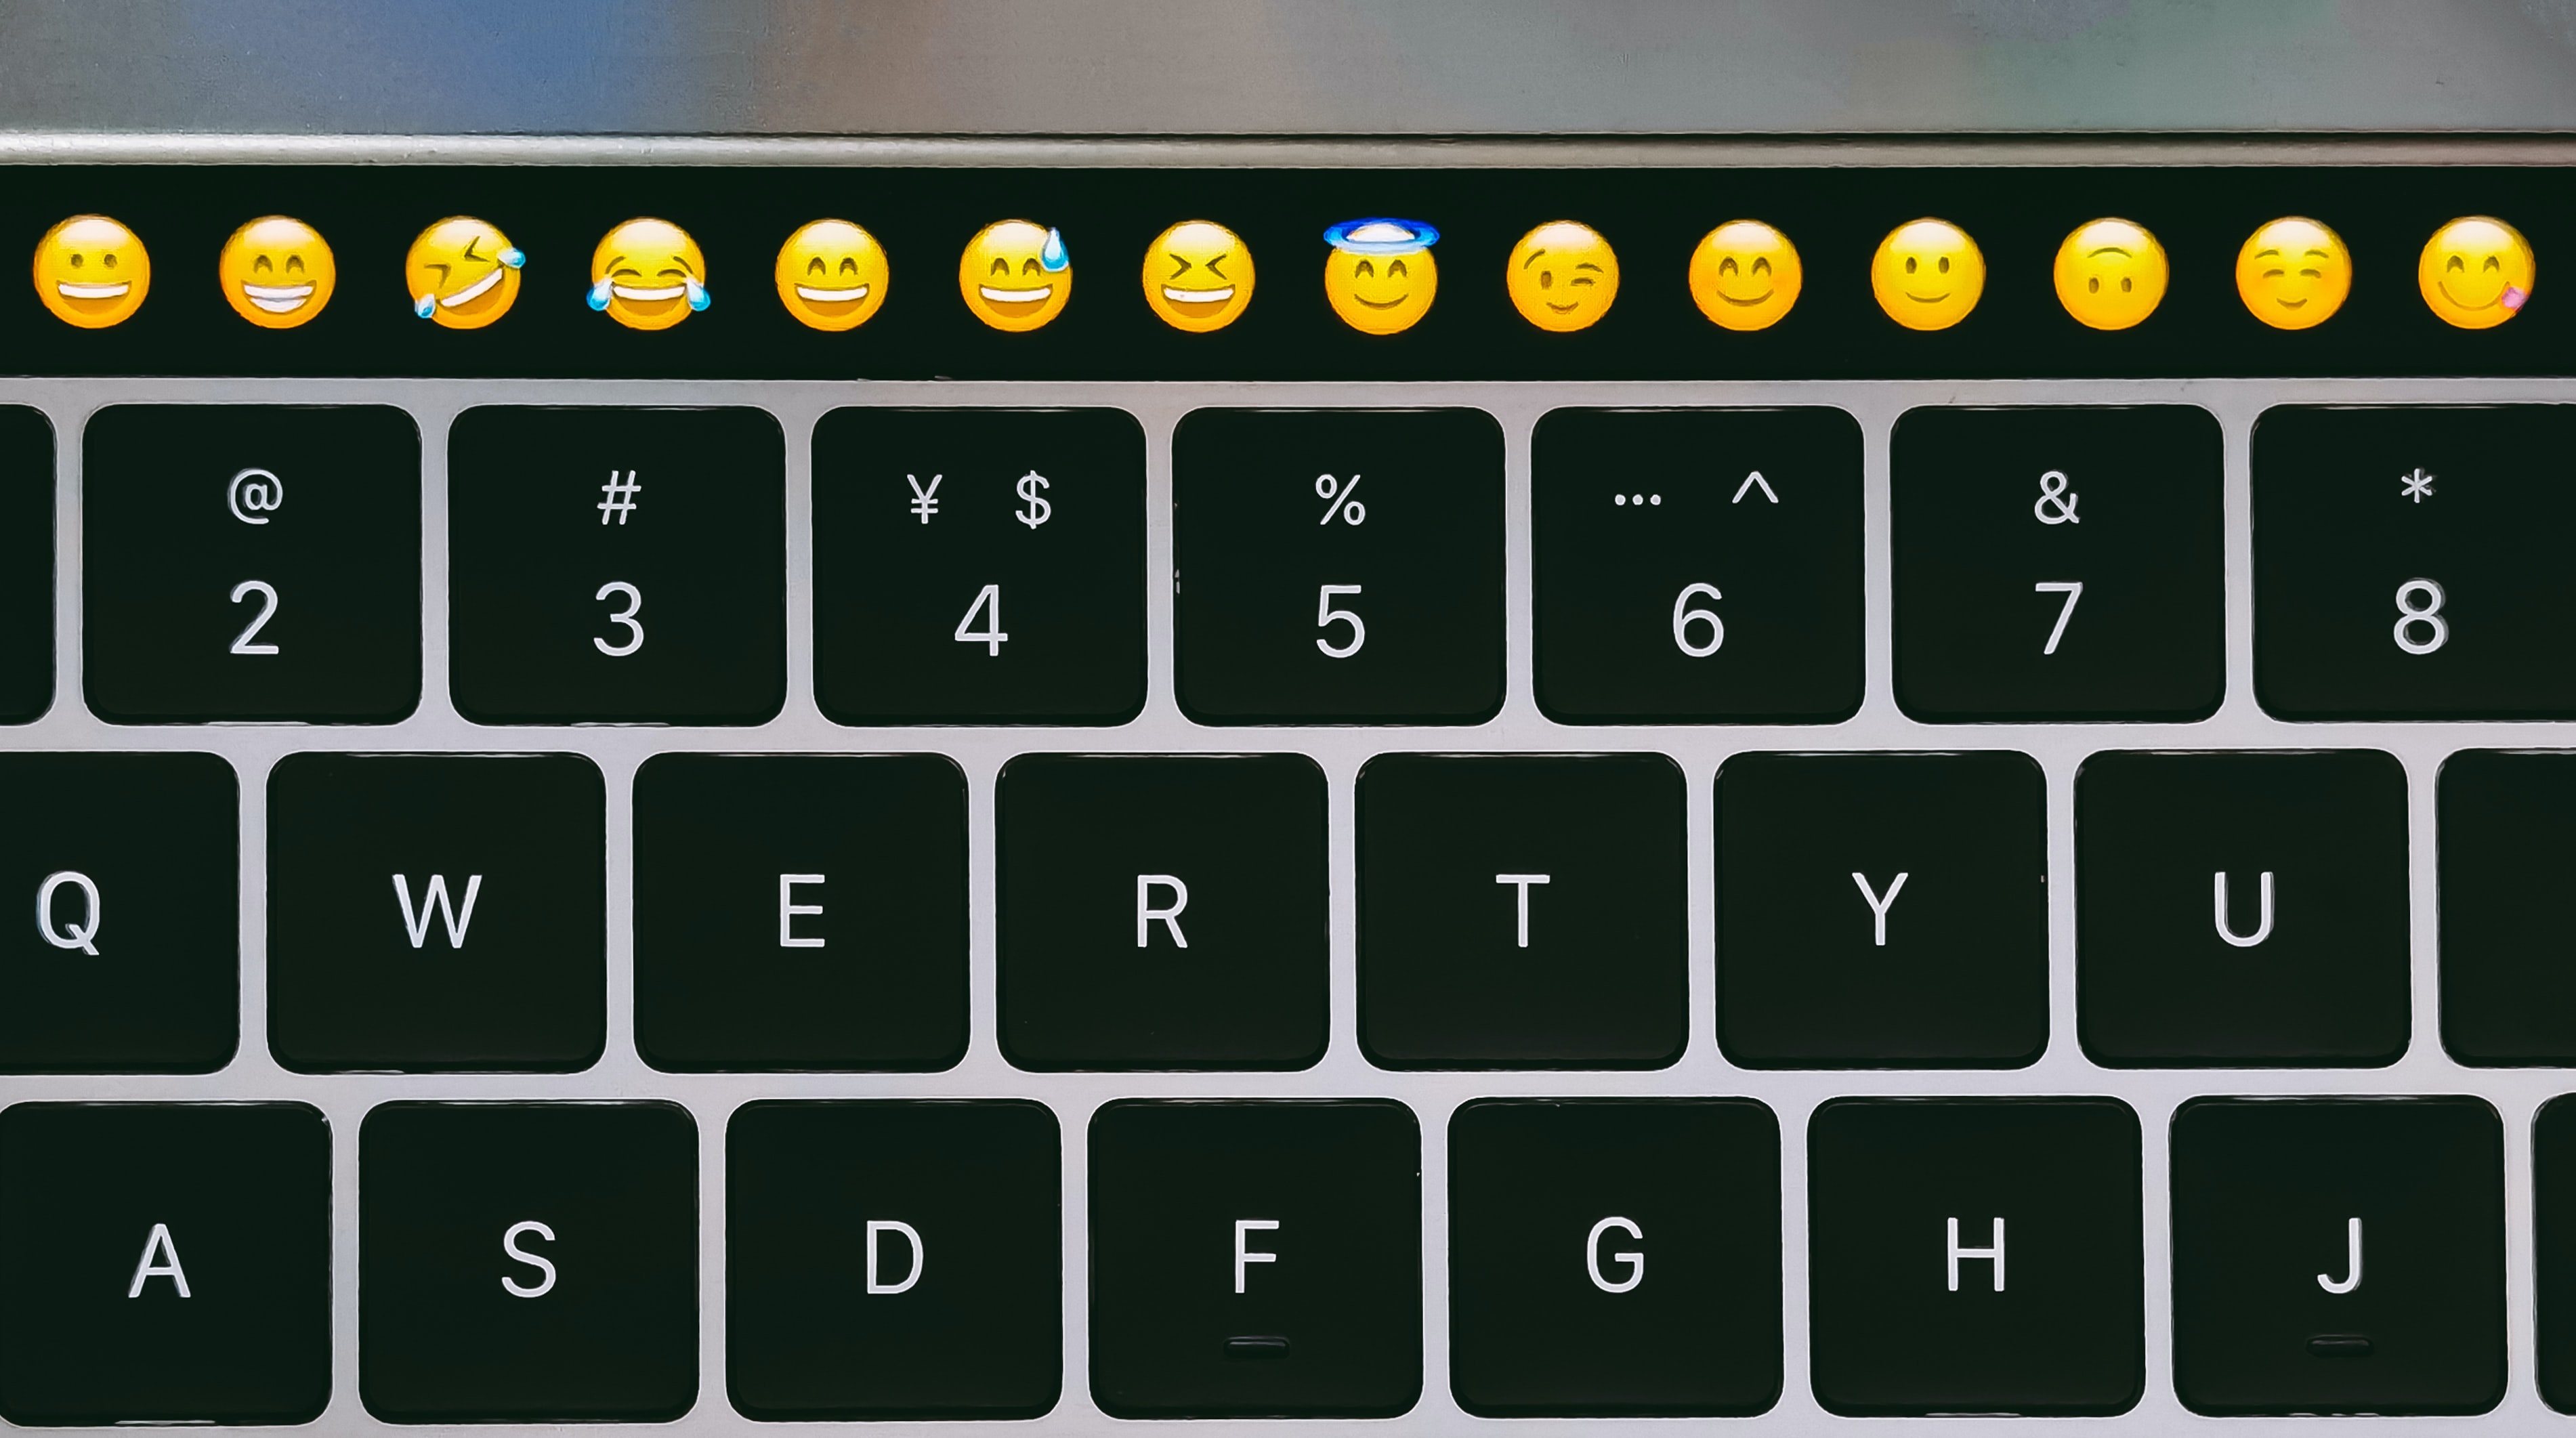 Computer keyboard with a row of emoji keys